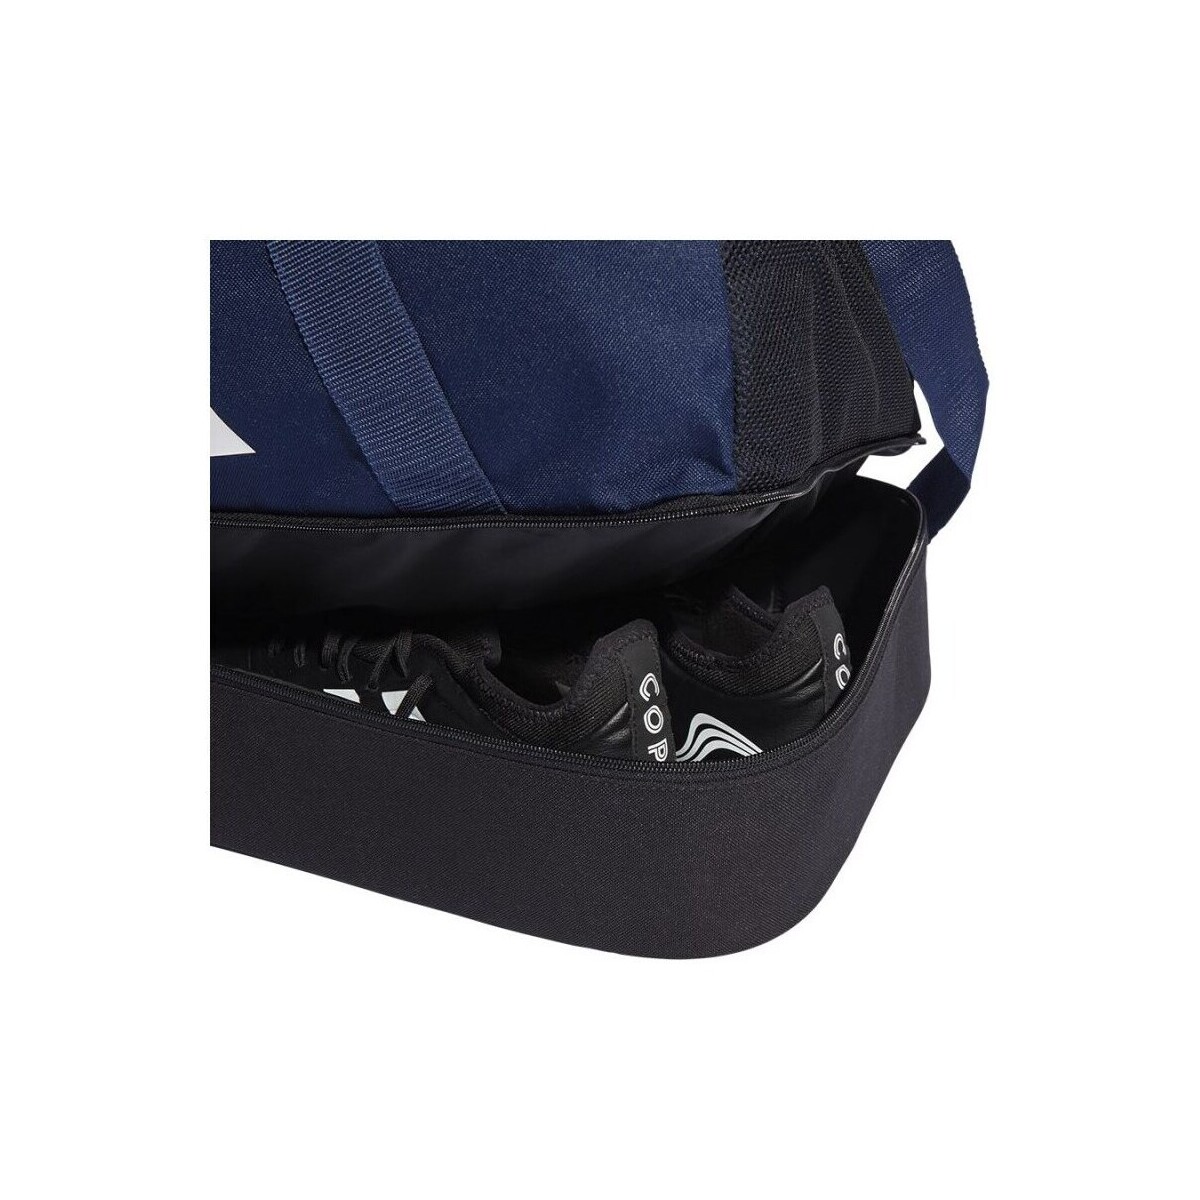 adidas Originals Marine Tiro Duffel Bag gkq1Dce2